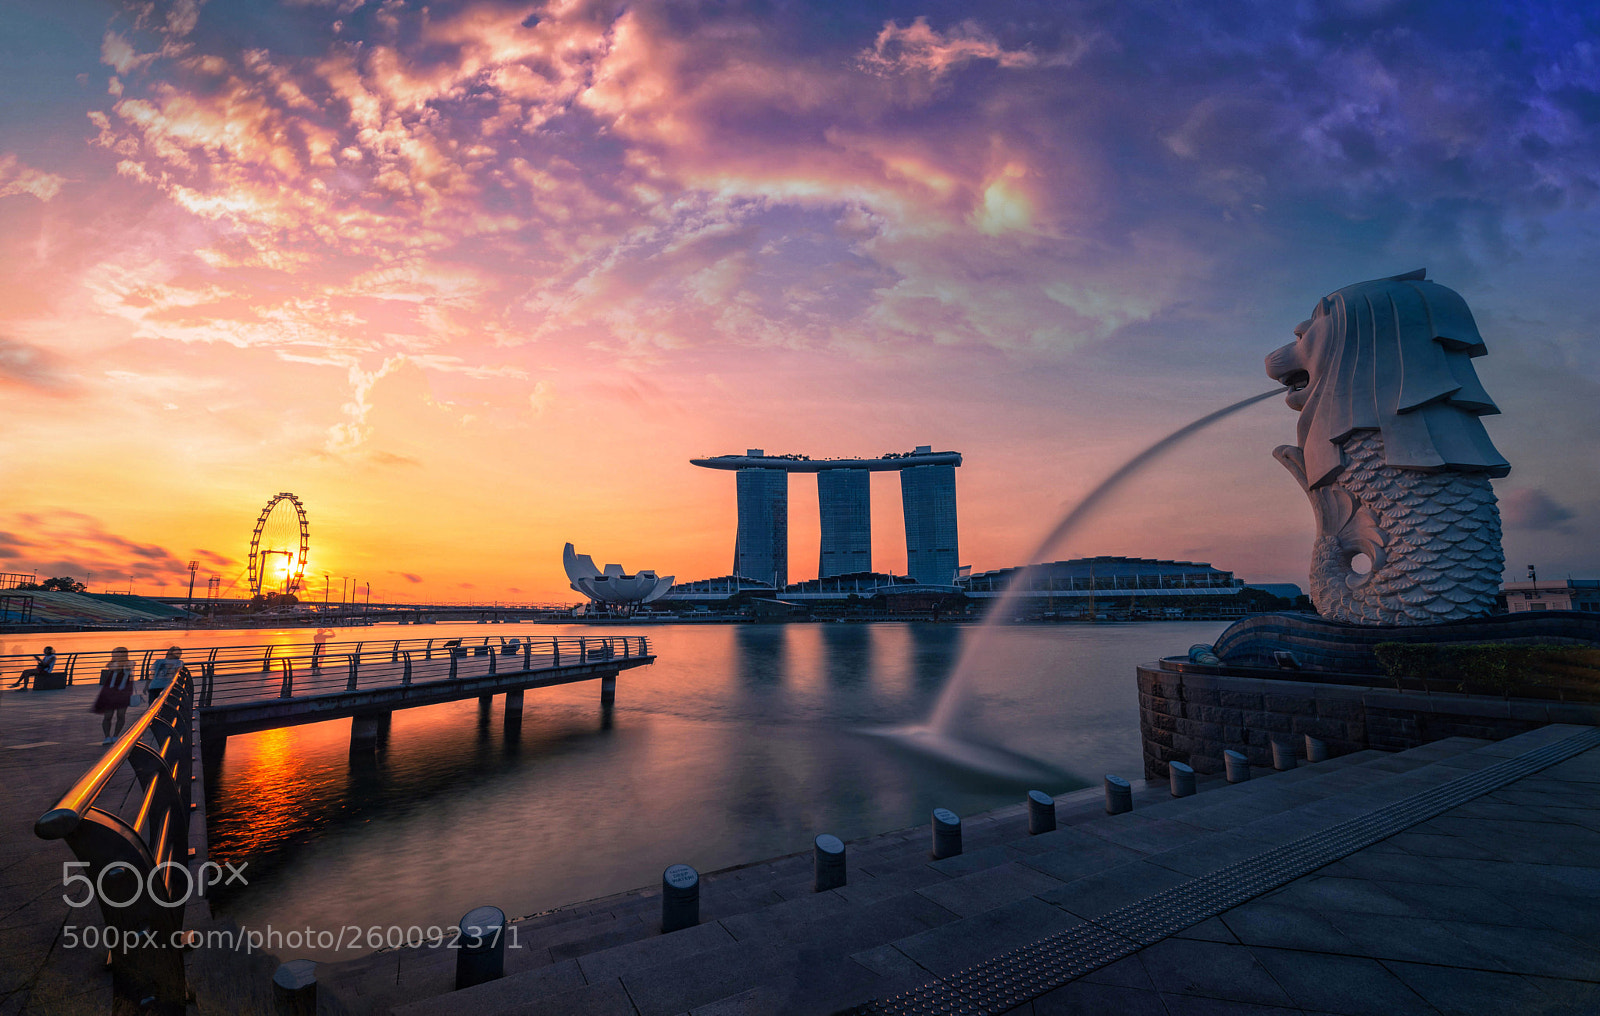 Nikon D750 sample photo. Singapore skyline and view photography